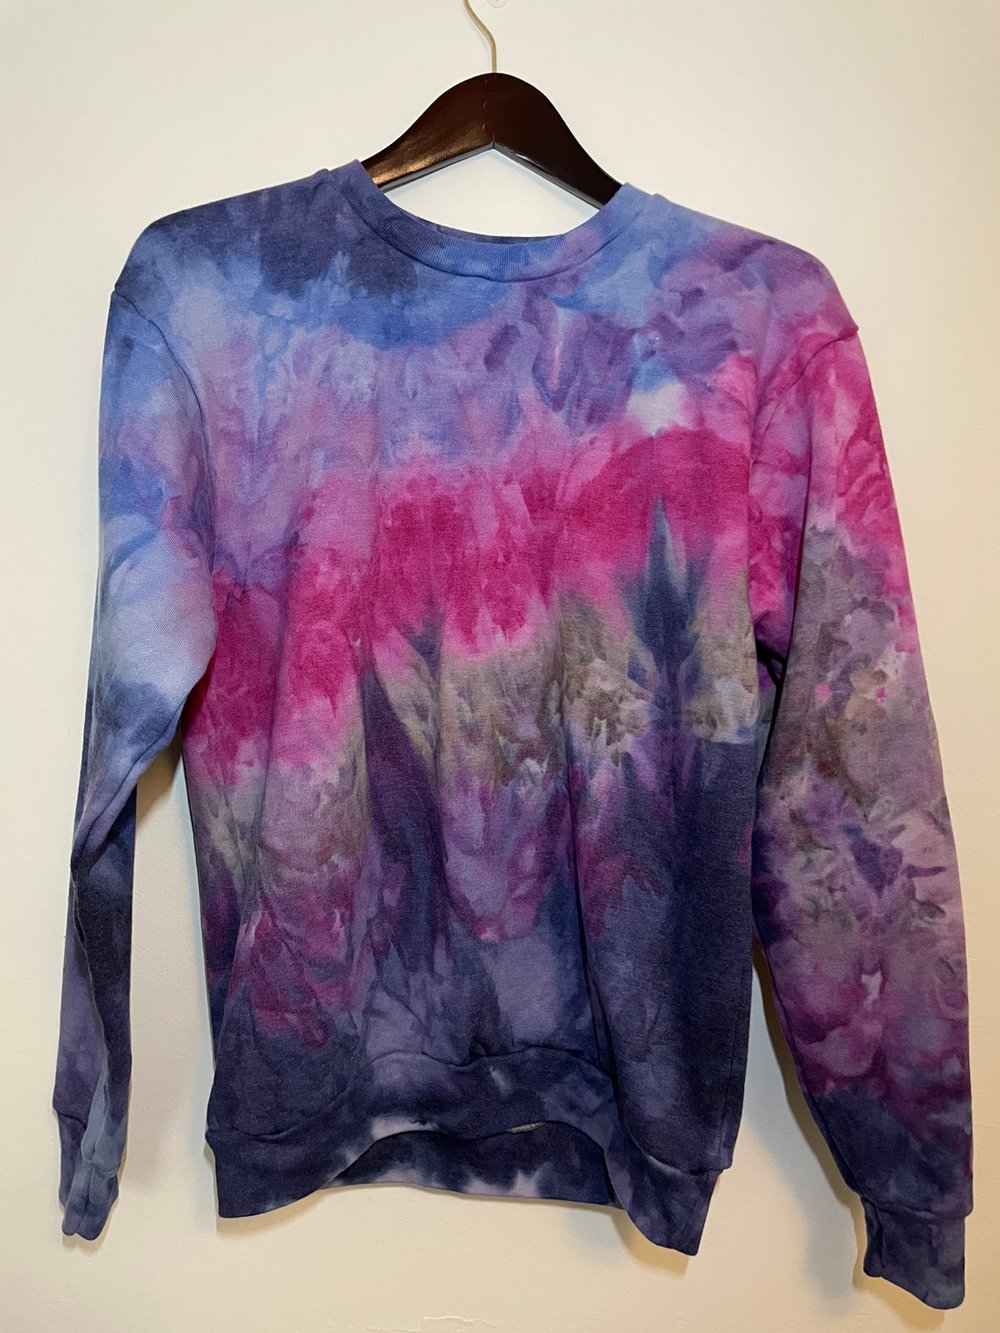 Tie-Dye Sweatshirt #4 - Medium